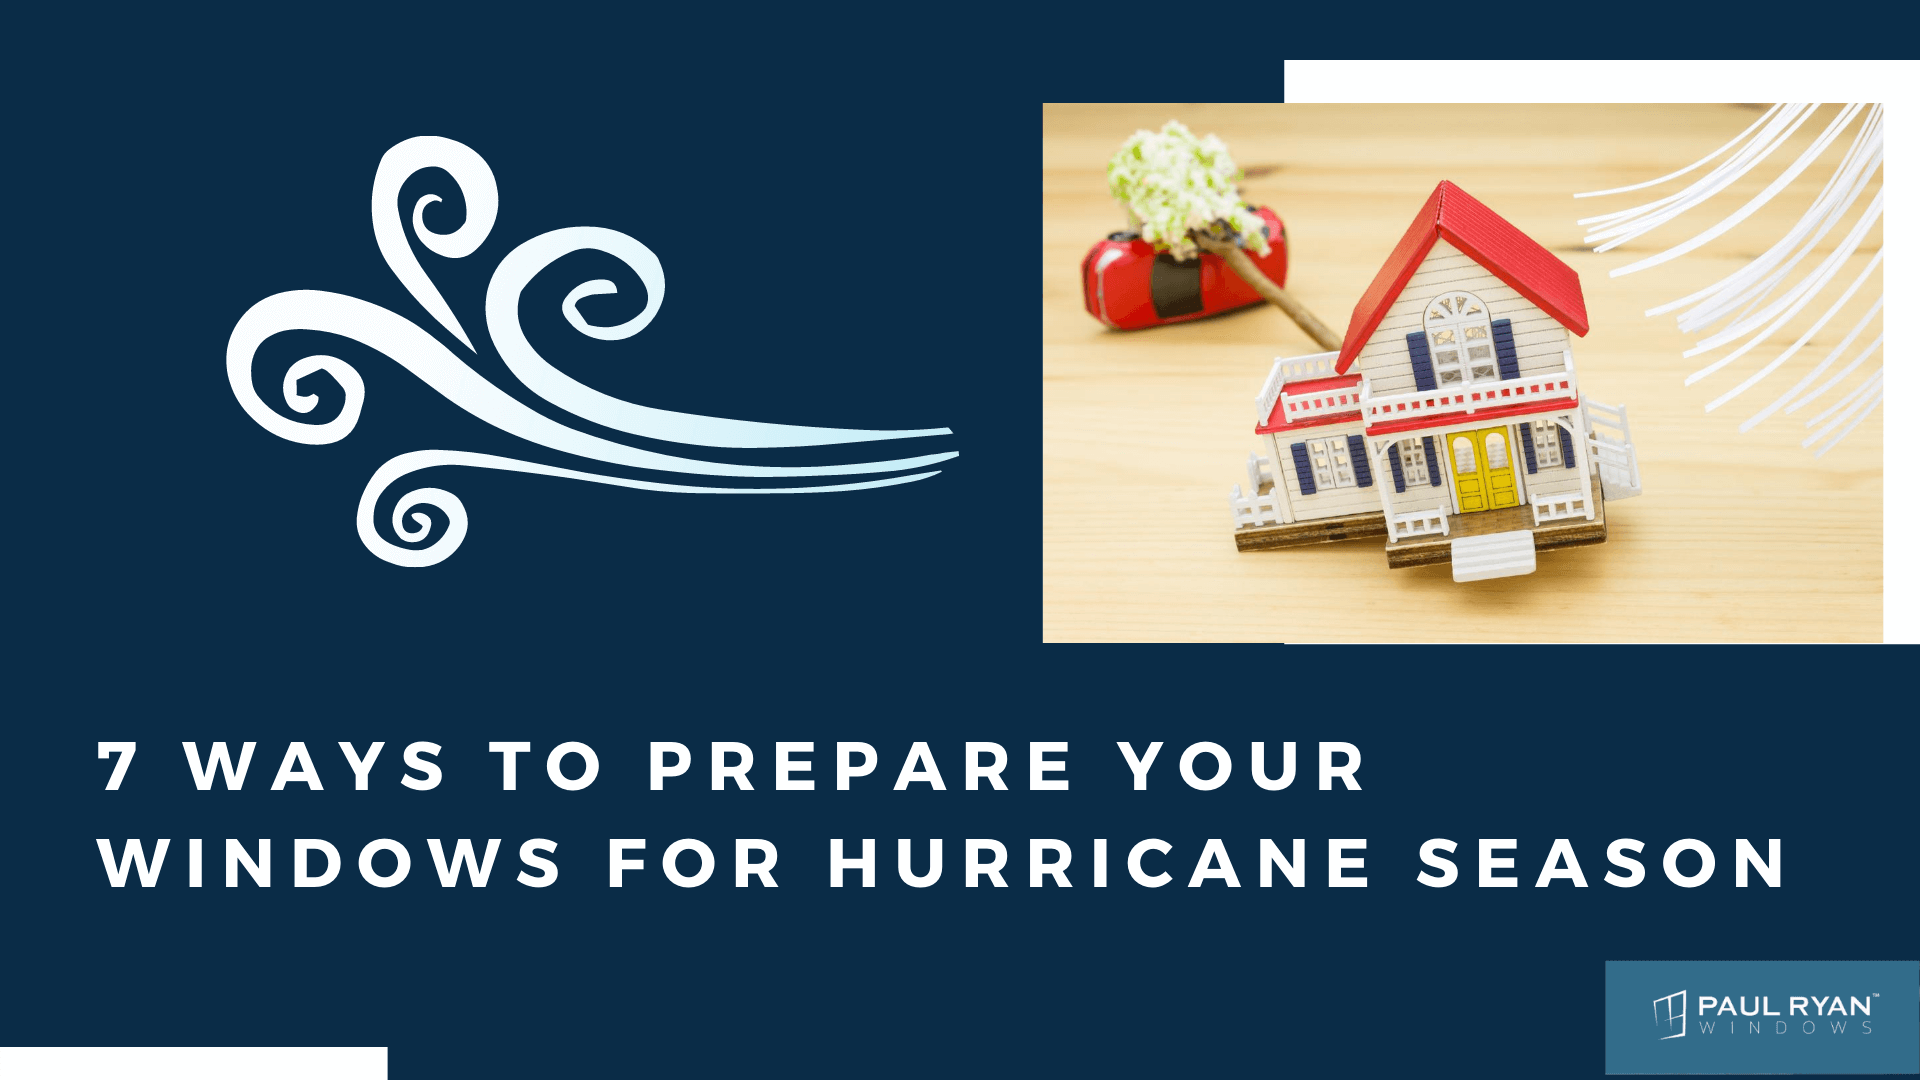 7 Ways to Prepare Your Windows for Hurricane Season